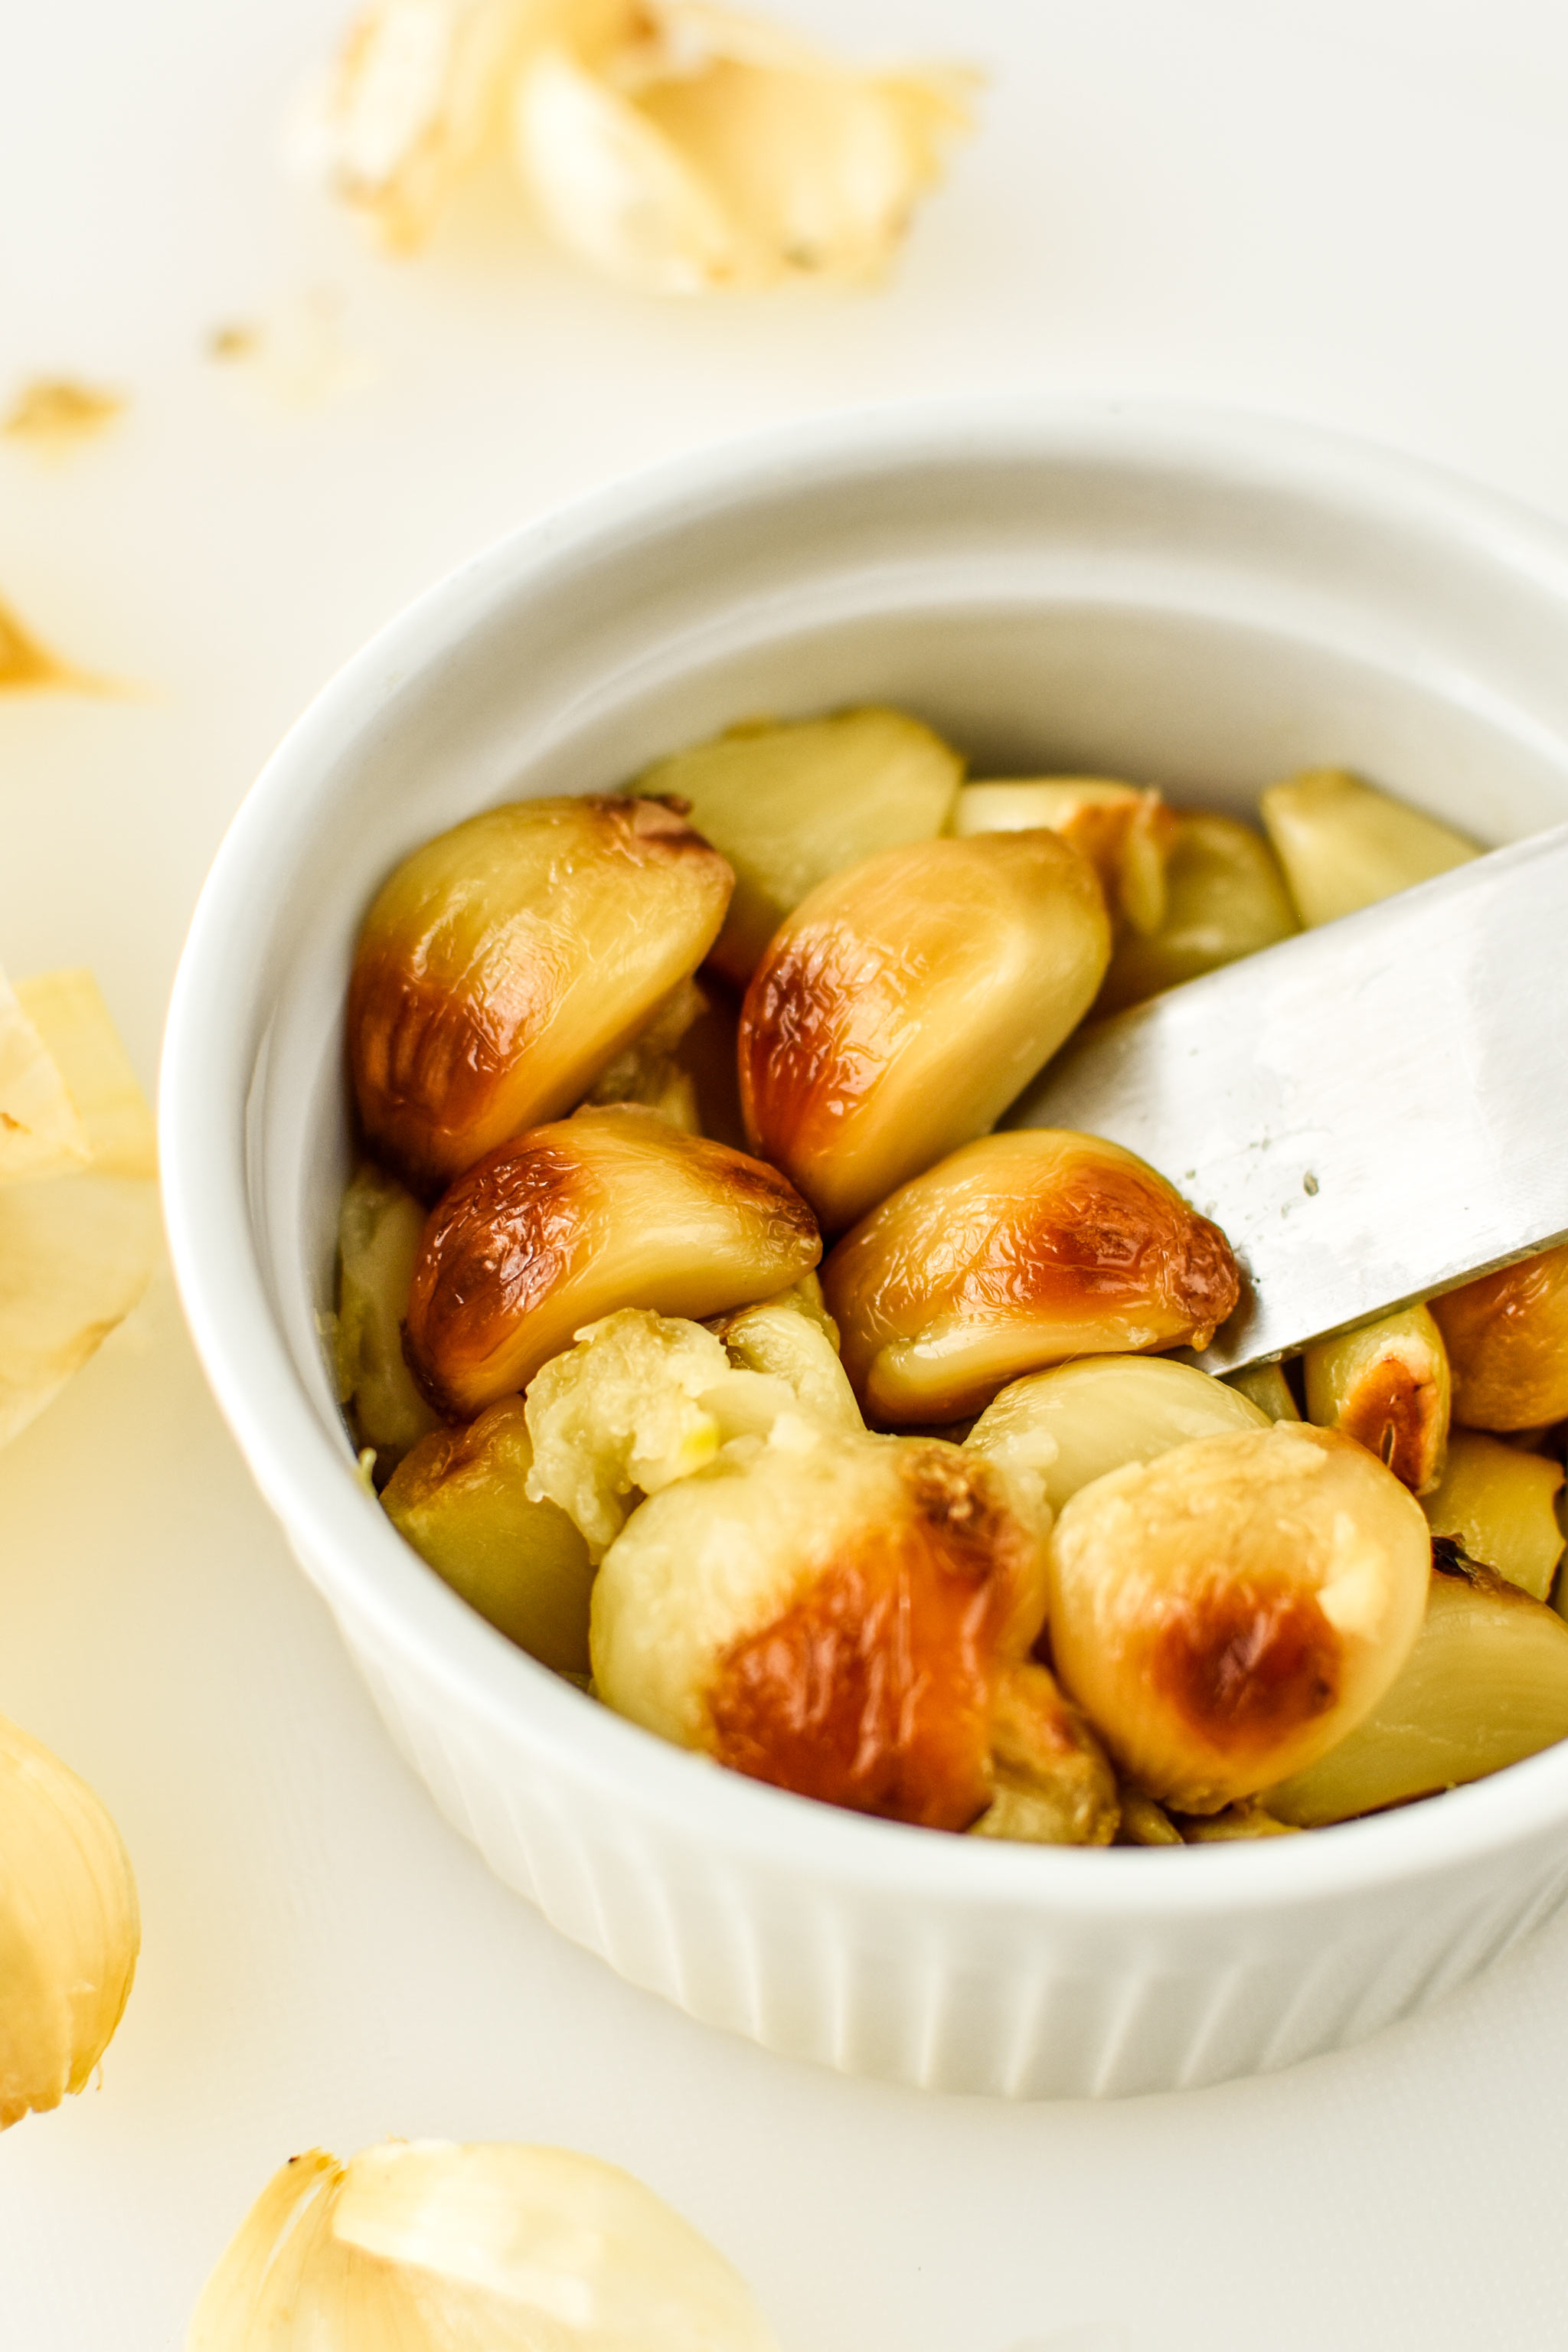 Roasted Garlic in an Air Fryer